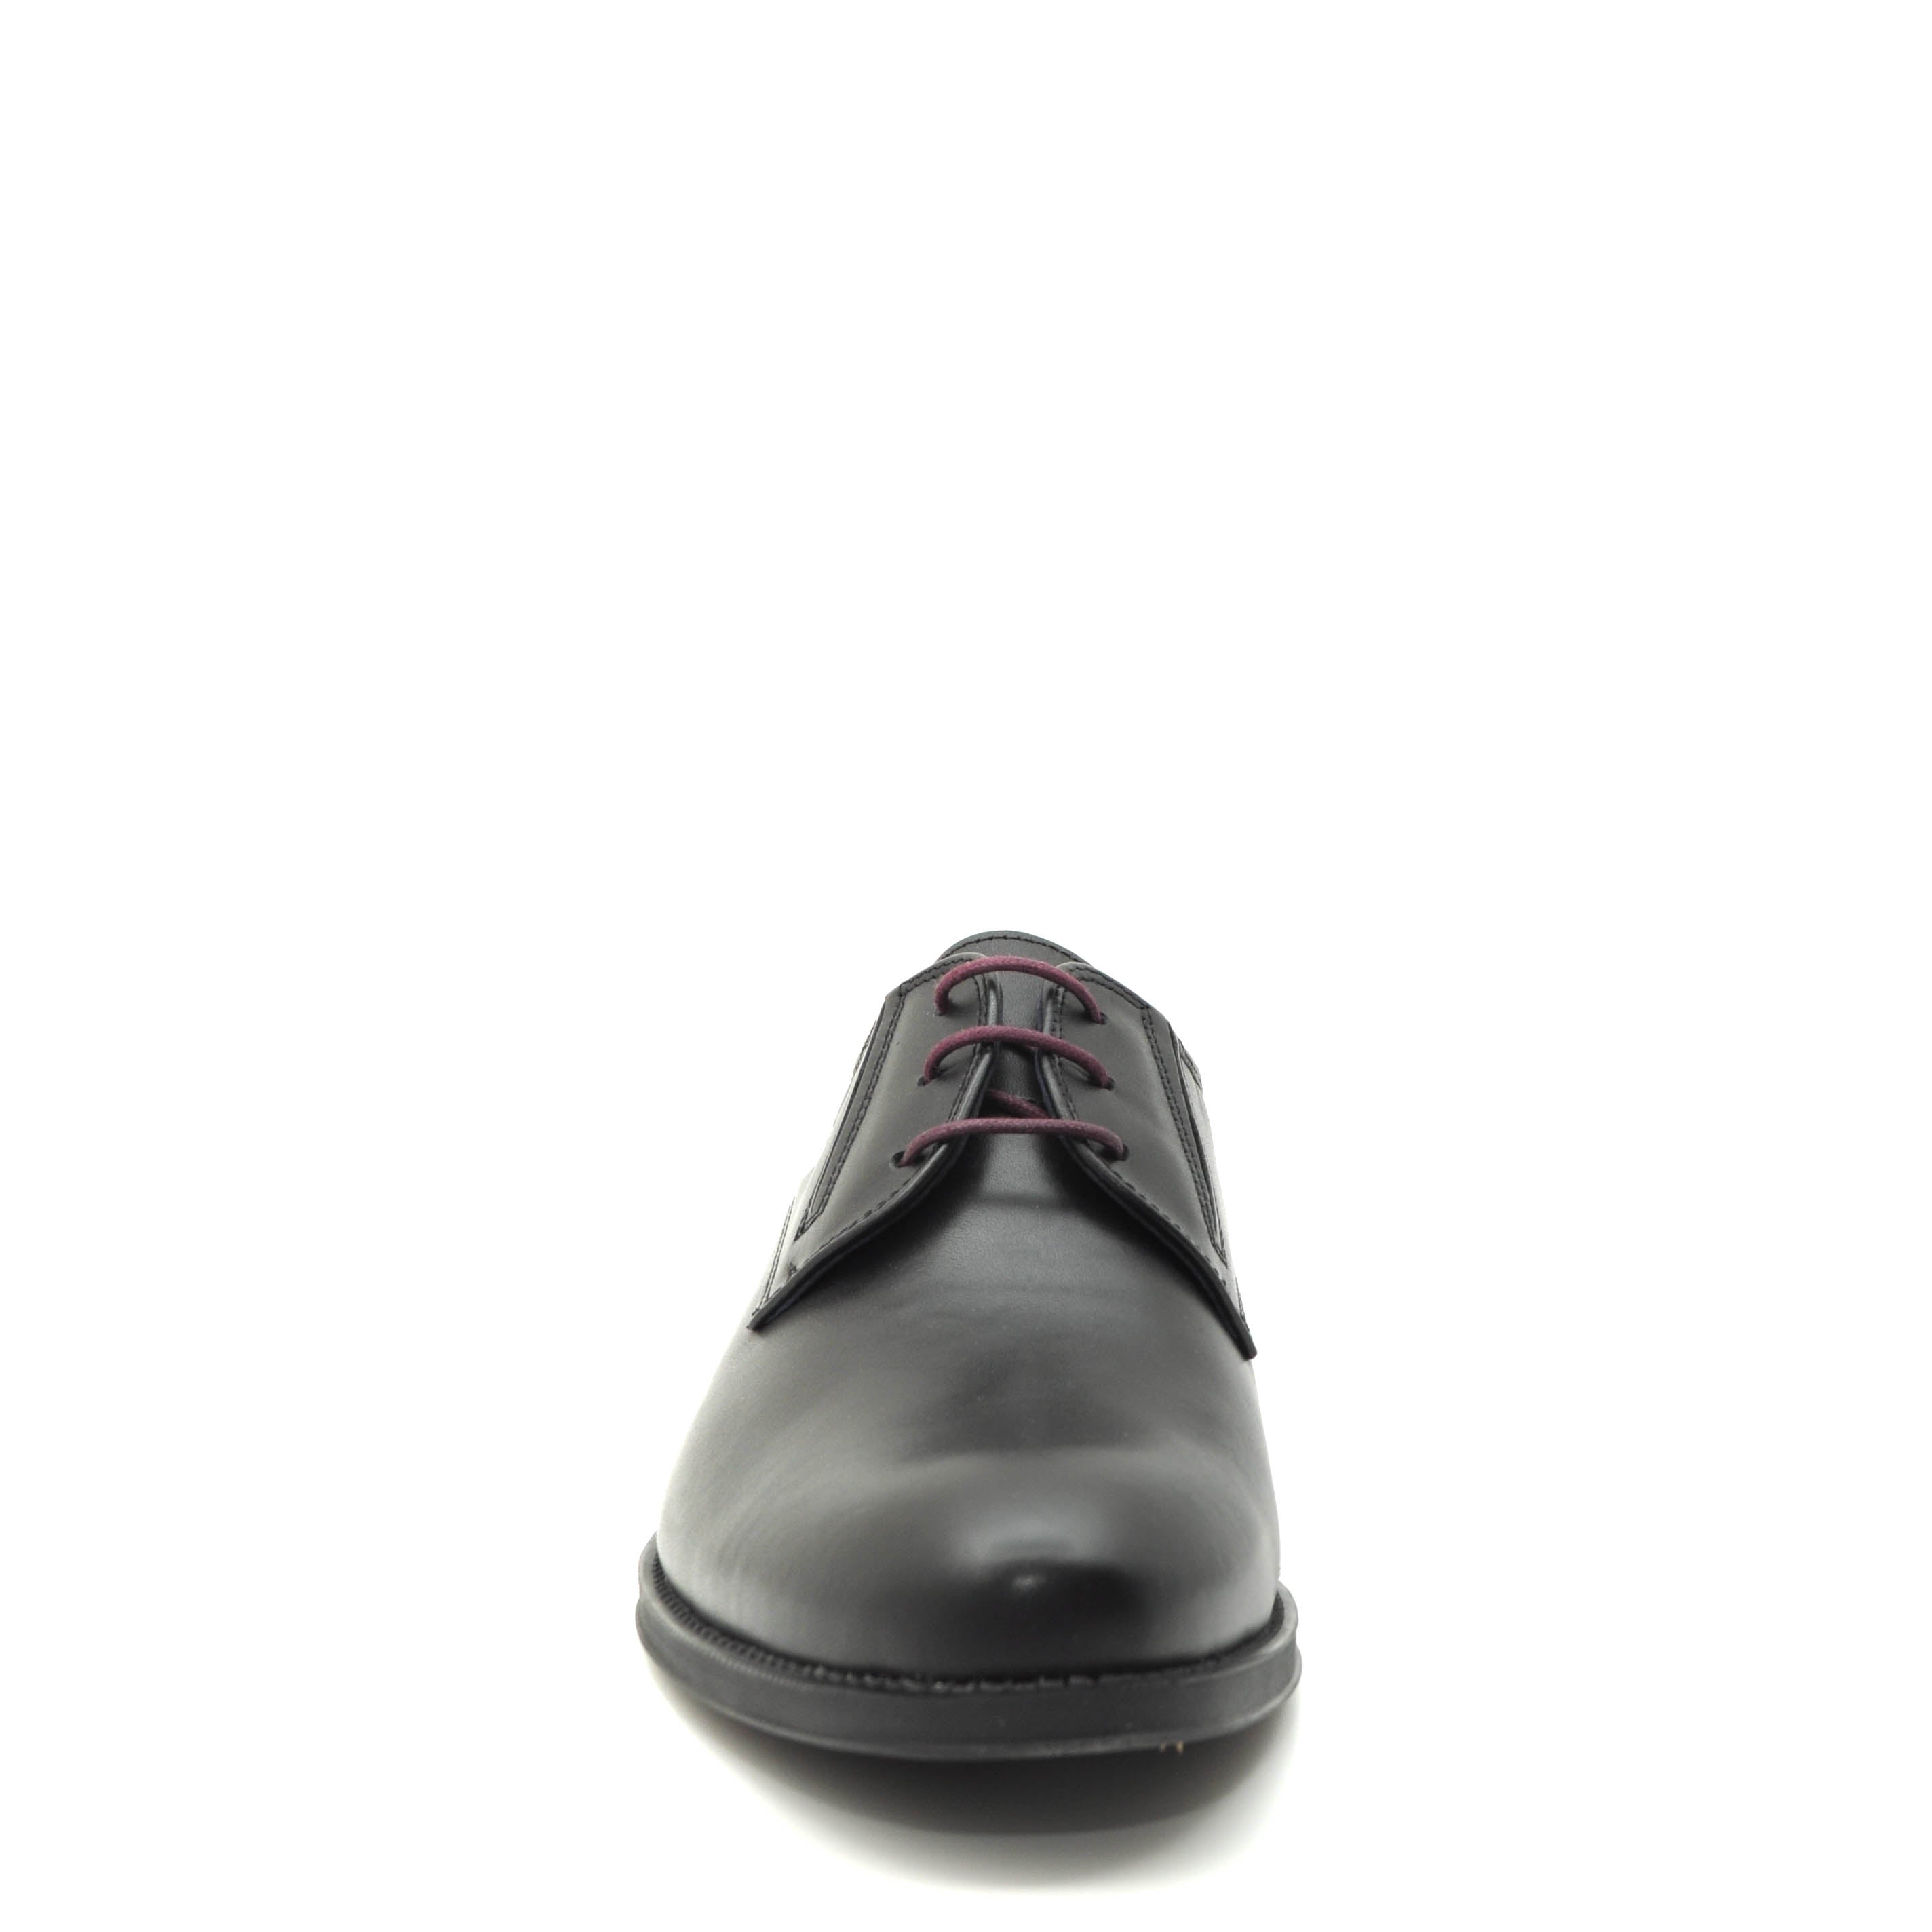 Fluchos black leather shoes for men